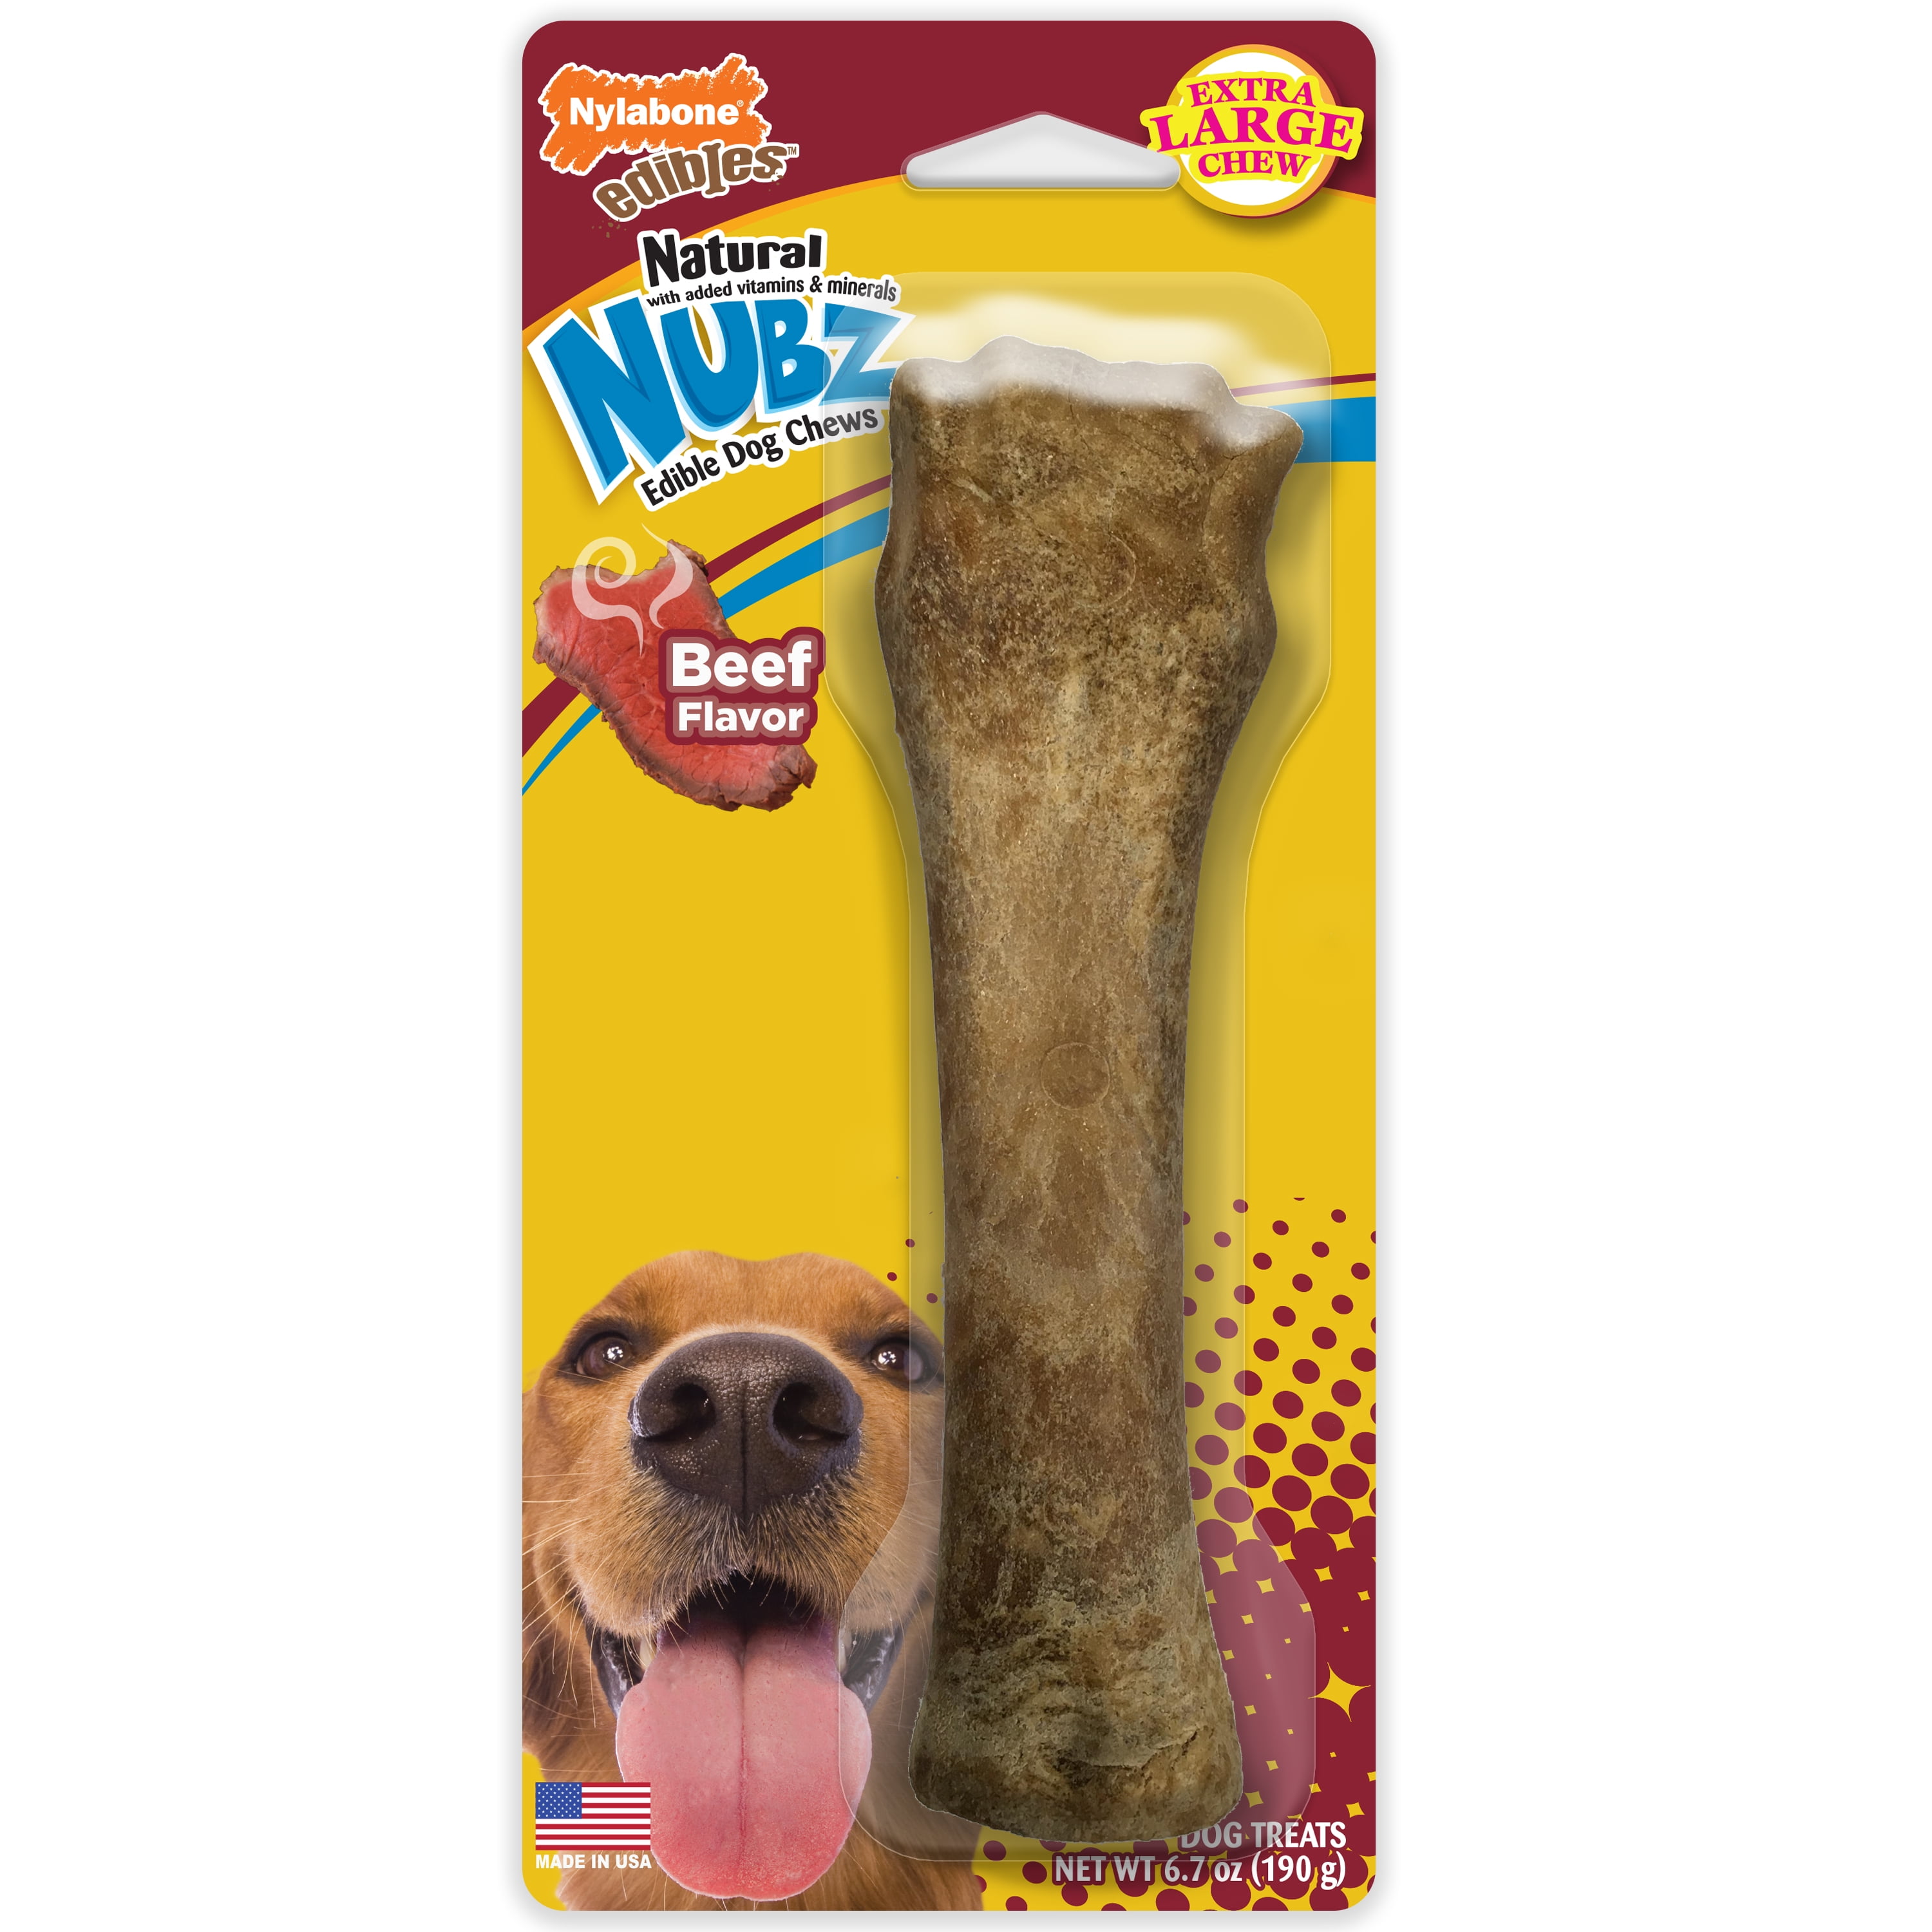 Nylabone Nubz Natural Long Lasting Edible Beef Dog Chews